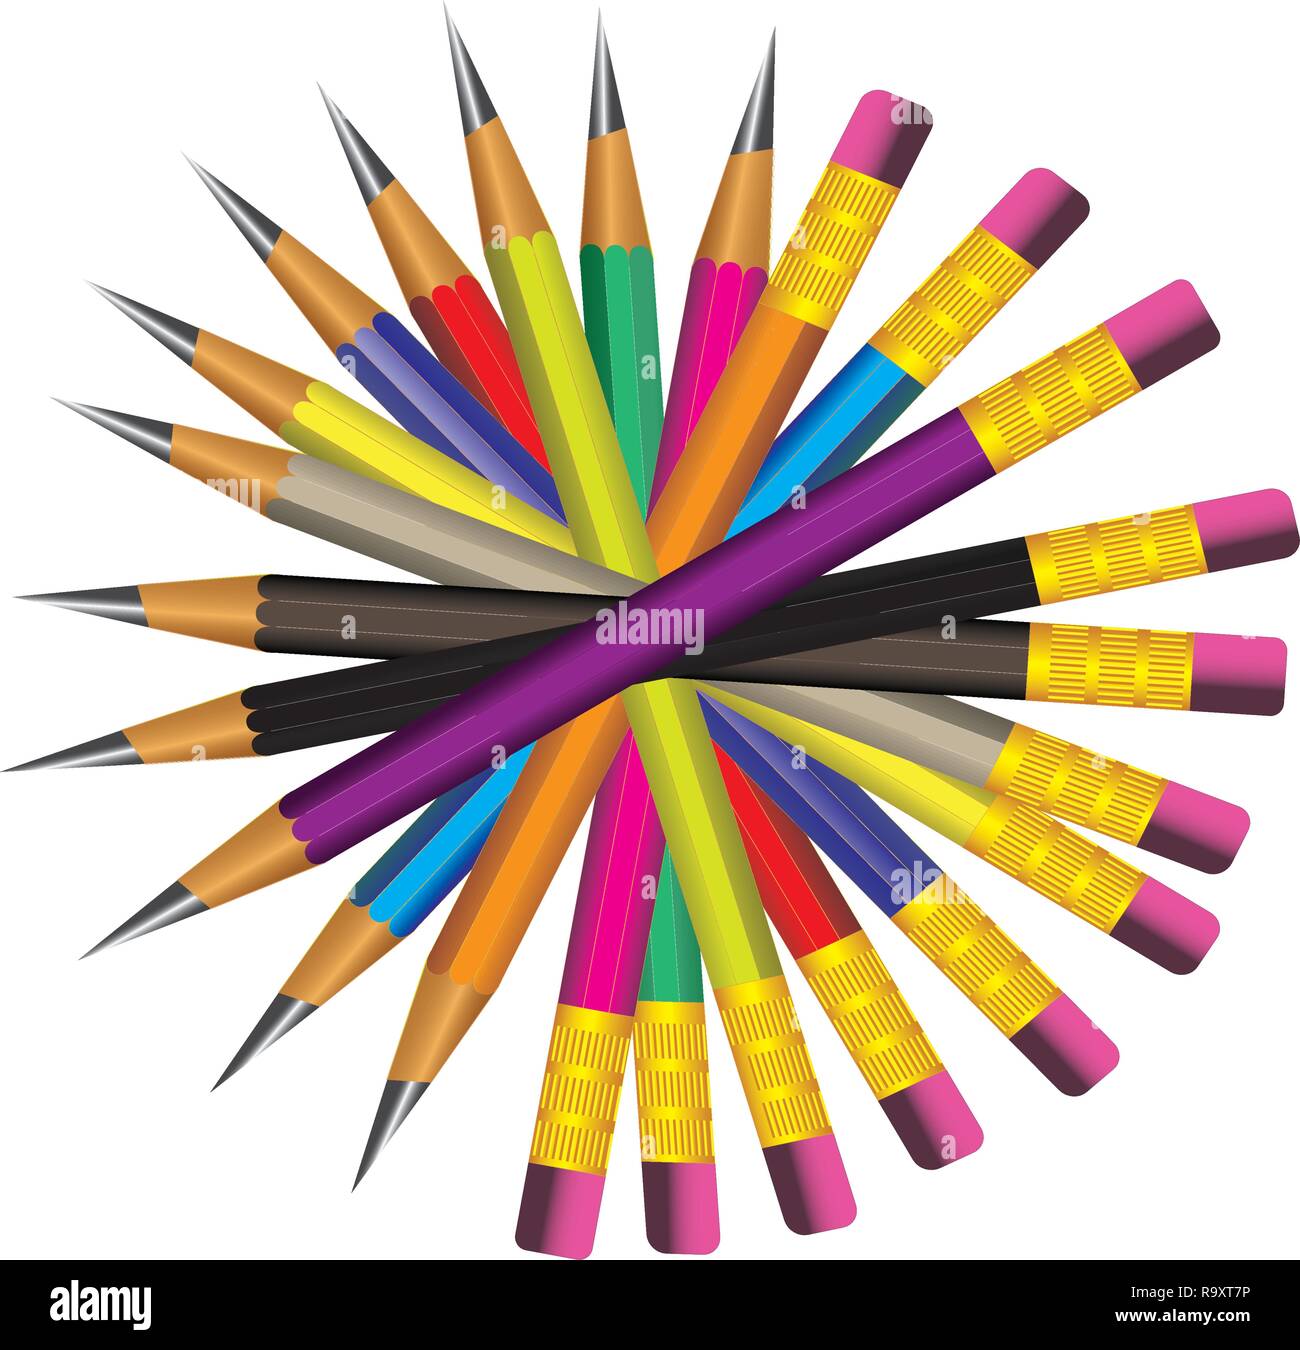 Vecteur Stock Design set of realistic colored pencils, eraser